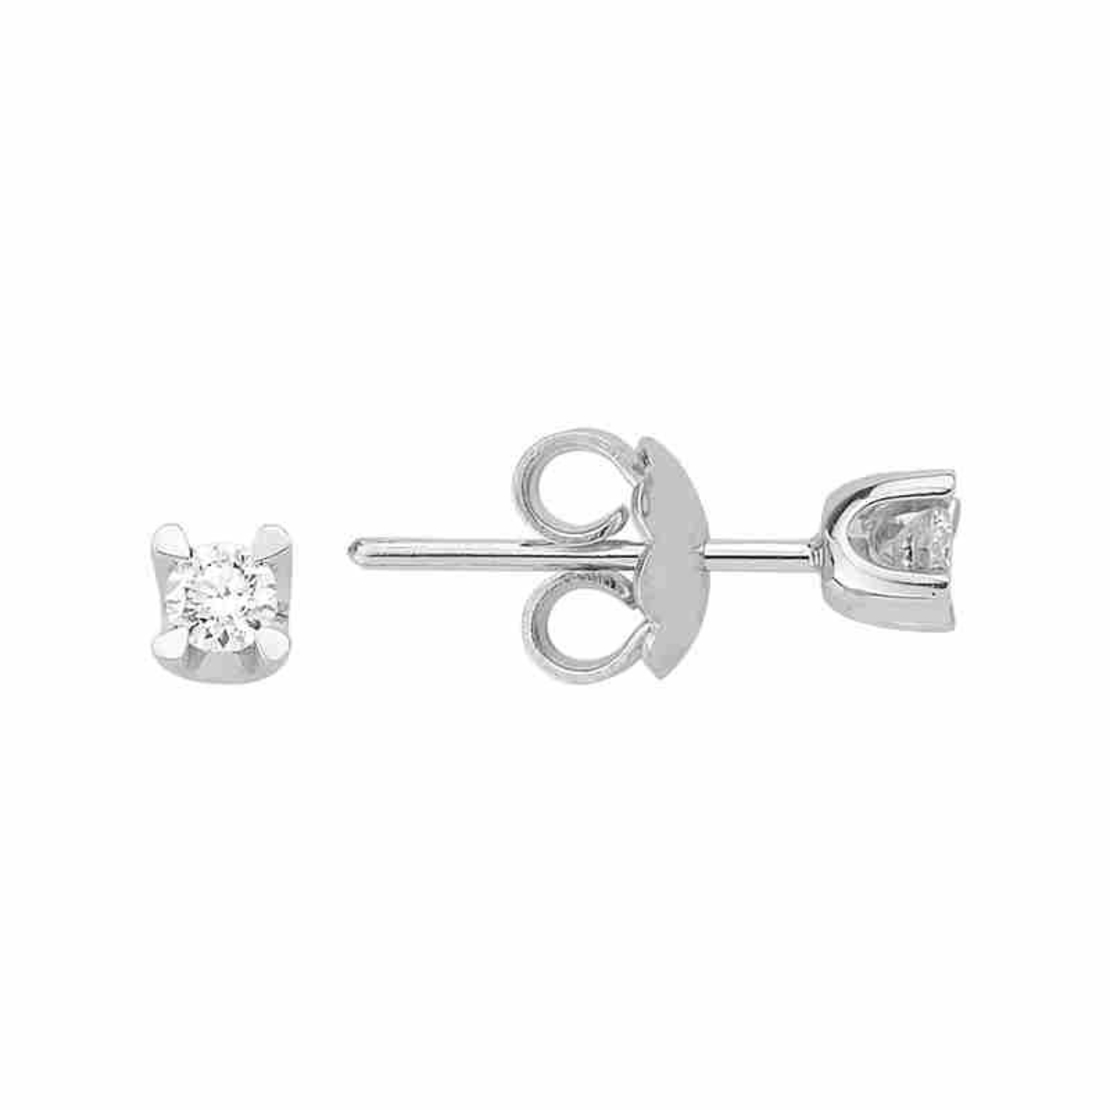 1.01 k Classic earrings with diamonds